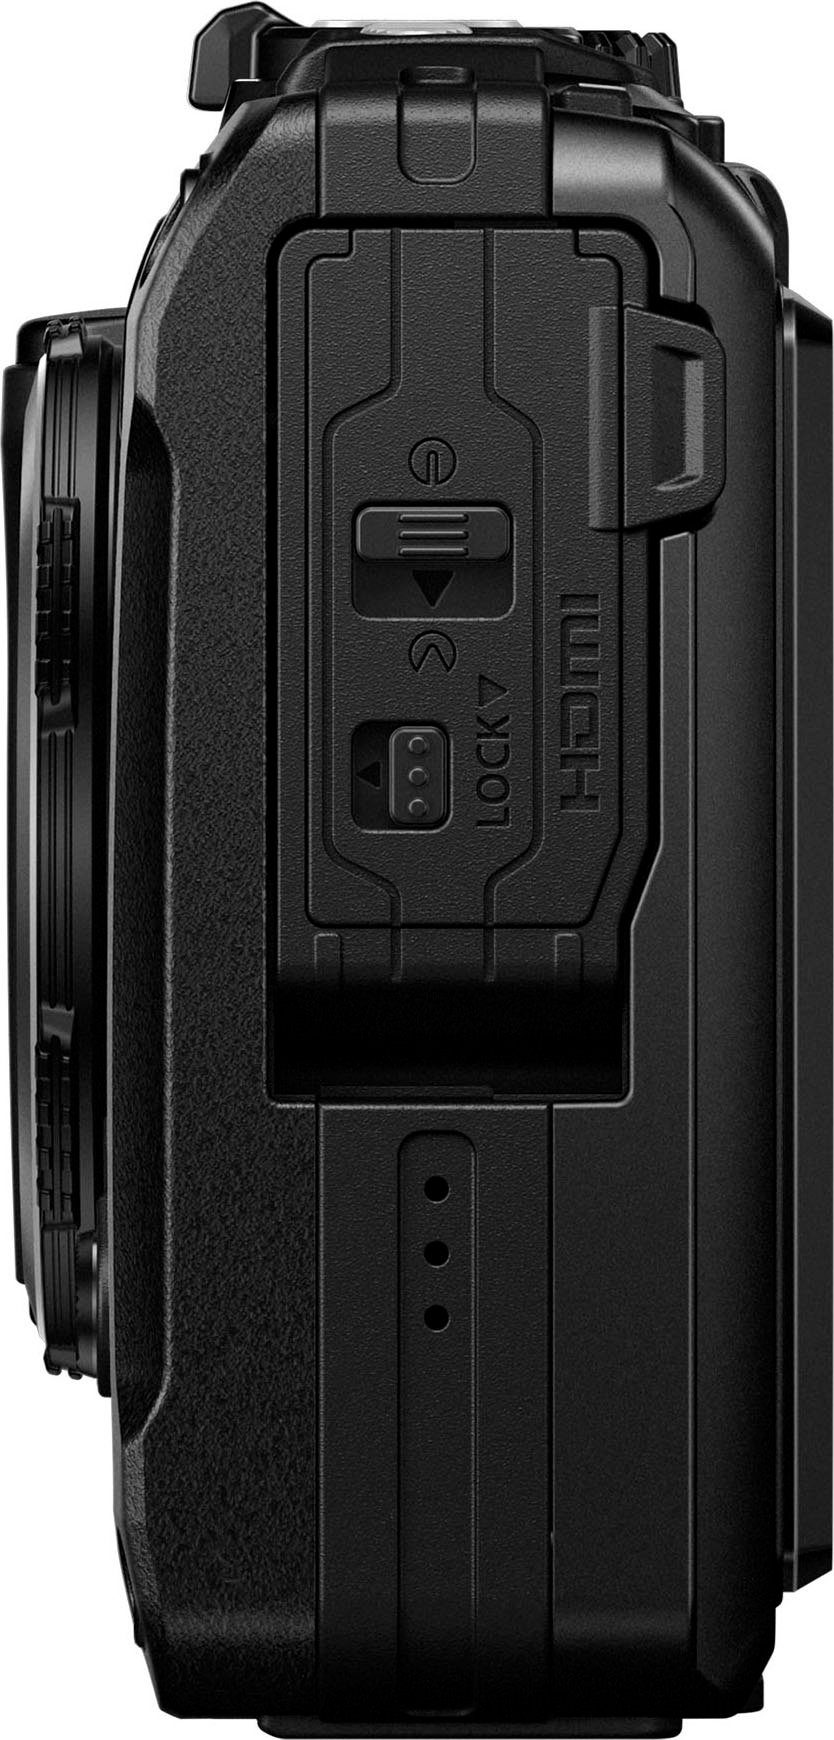 (Wi-Fi) Kompaktkamera schwarz Zoom, Bluetooth, opt. Tough Olympus TG-7 WLAN (12 MP, 4x